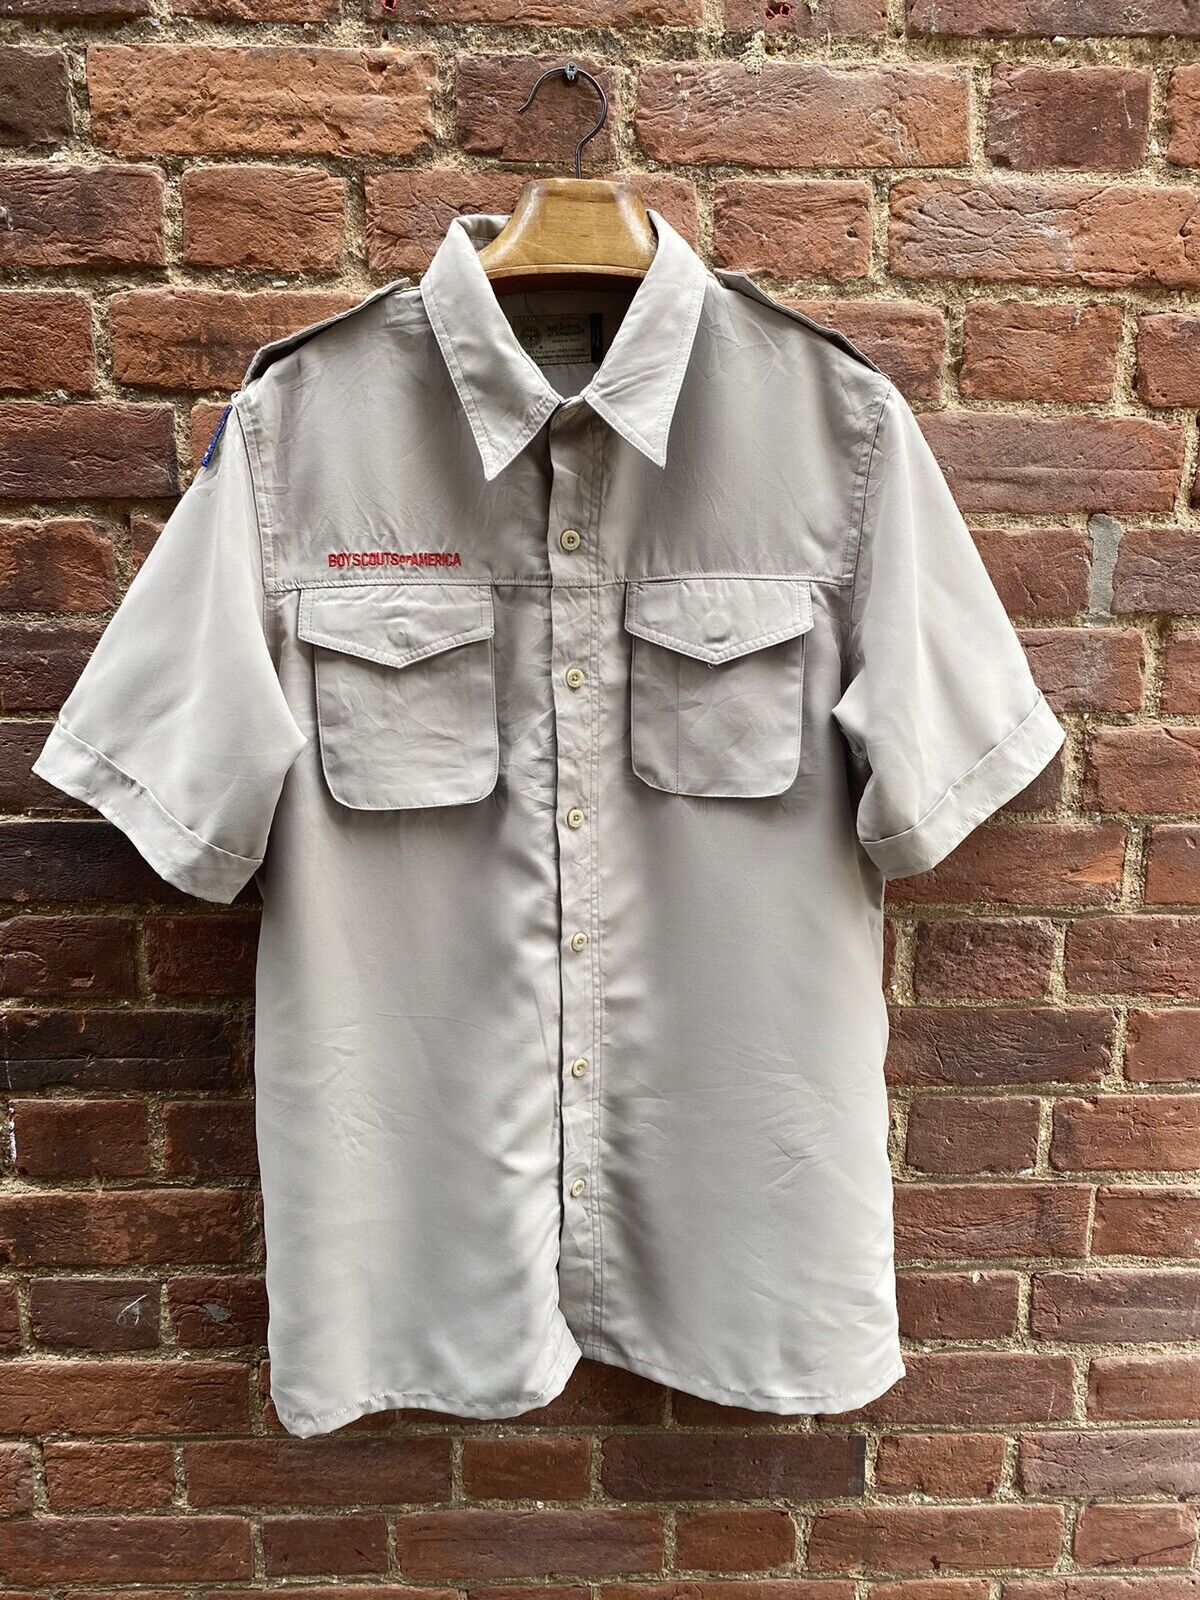 BNWT Boy Scouts of America Beige Short Sleeved Uniform Shirt Medium